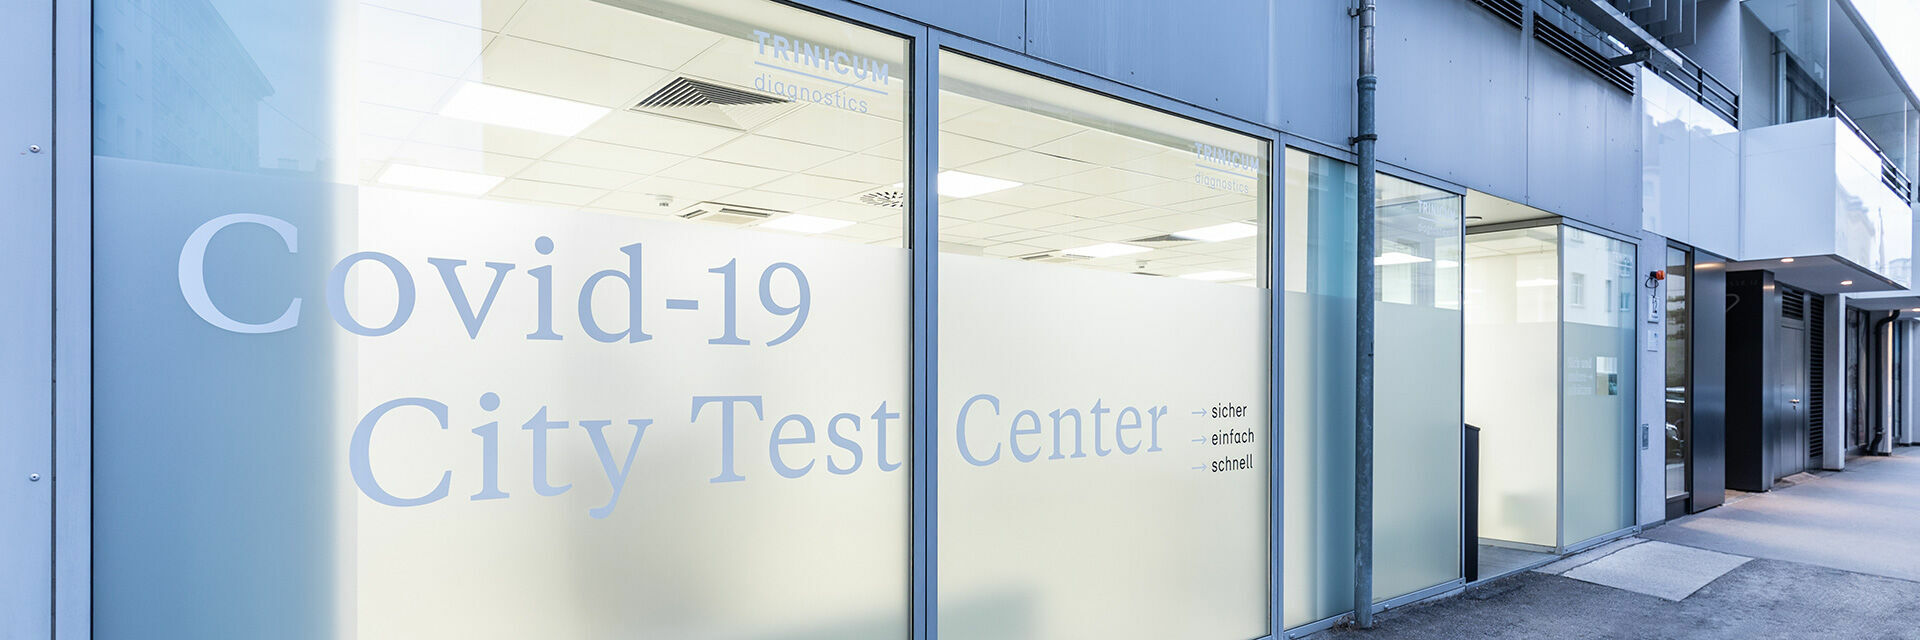 Covid-10 City Test Center Wien - TRINICUM diagnostics